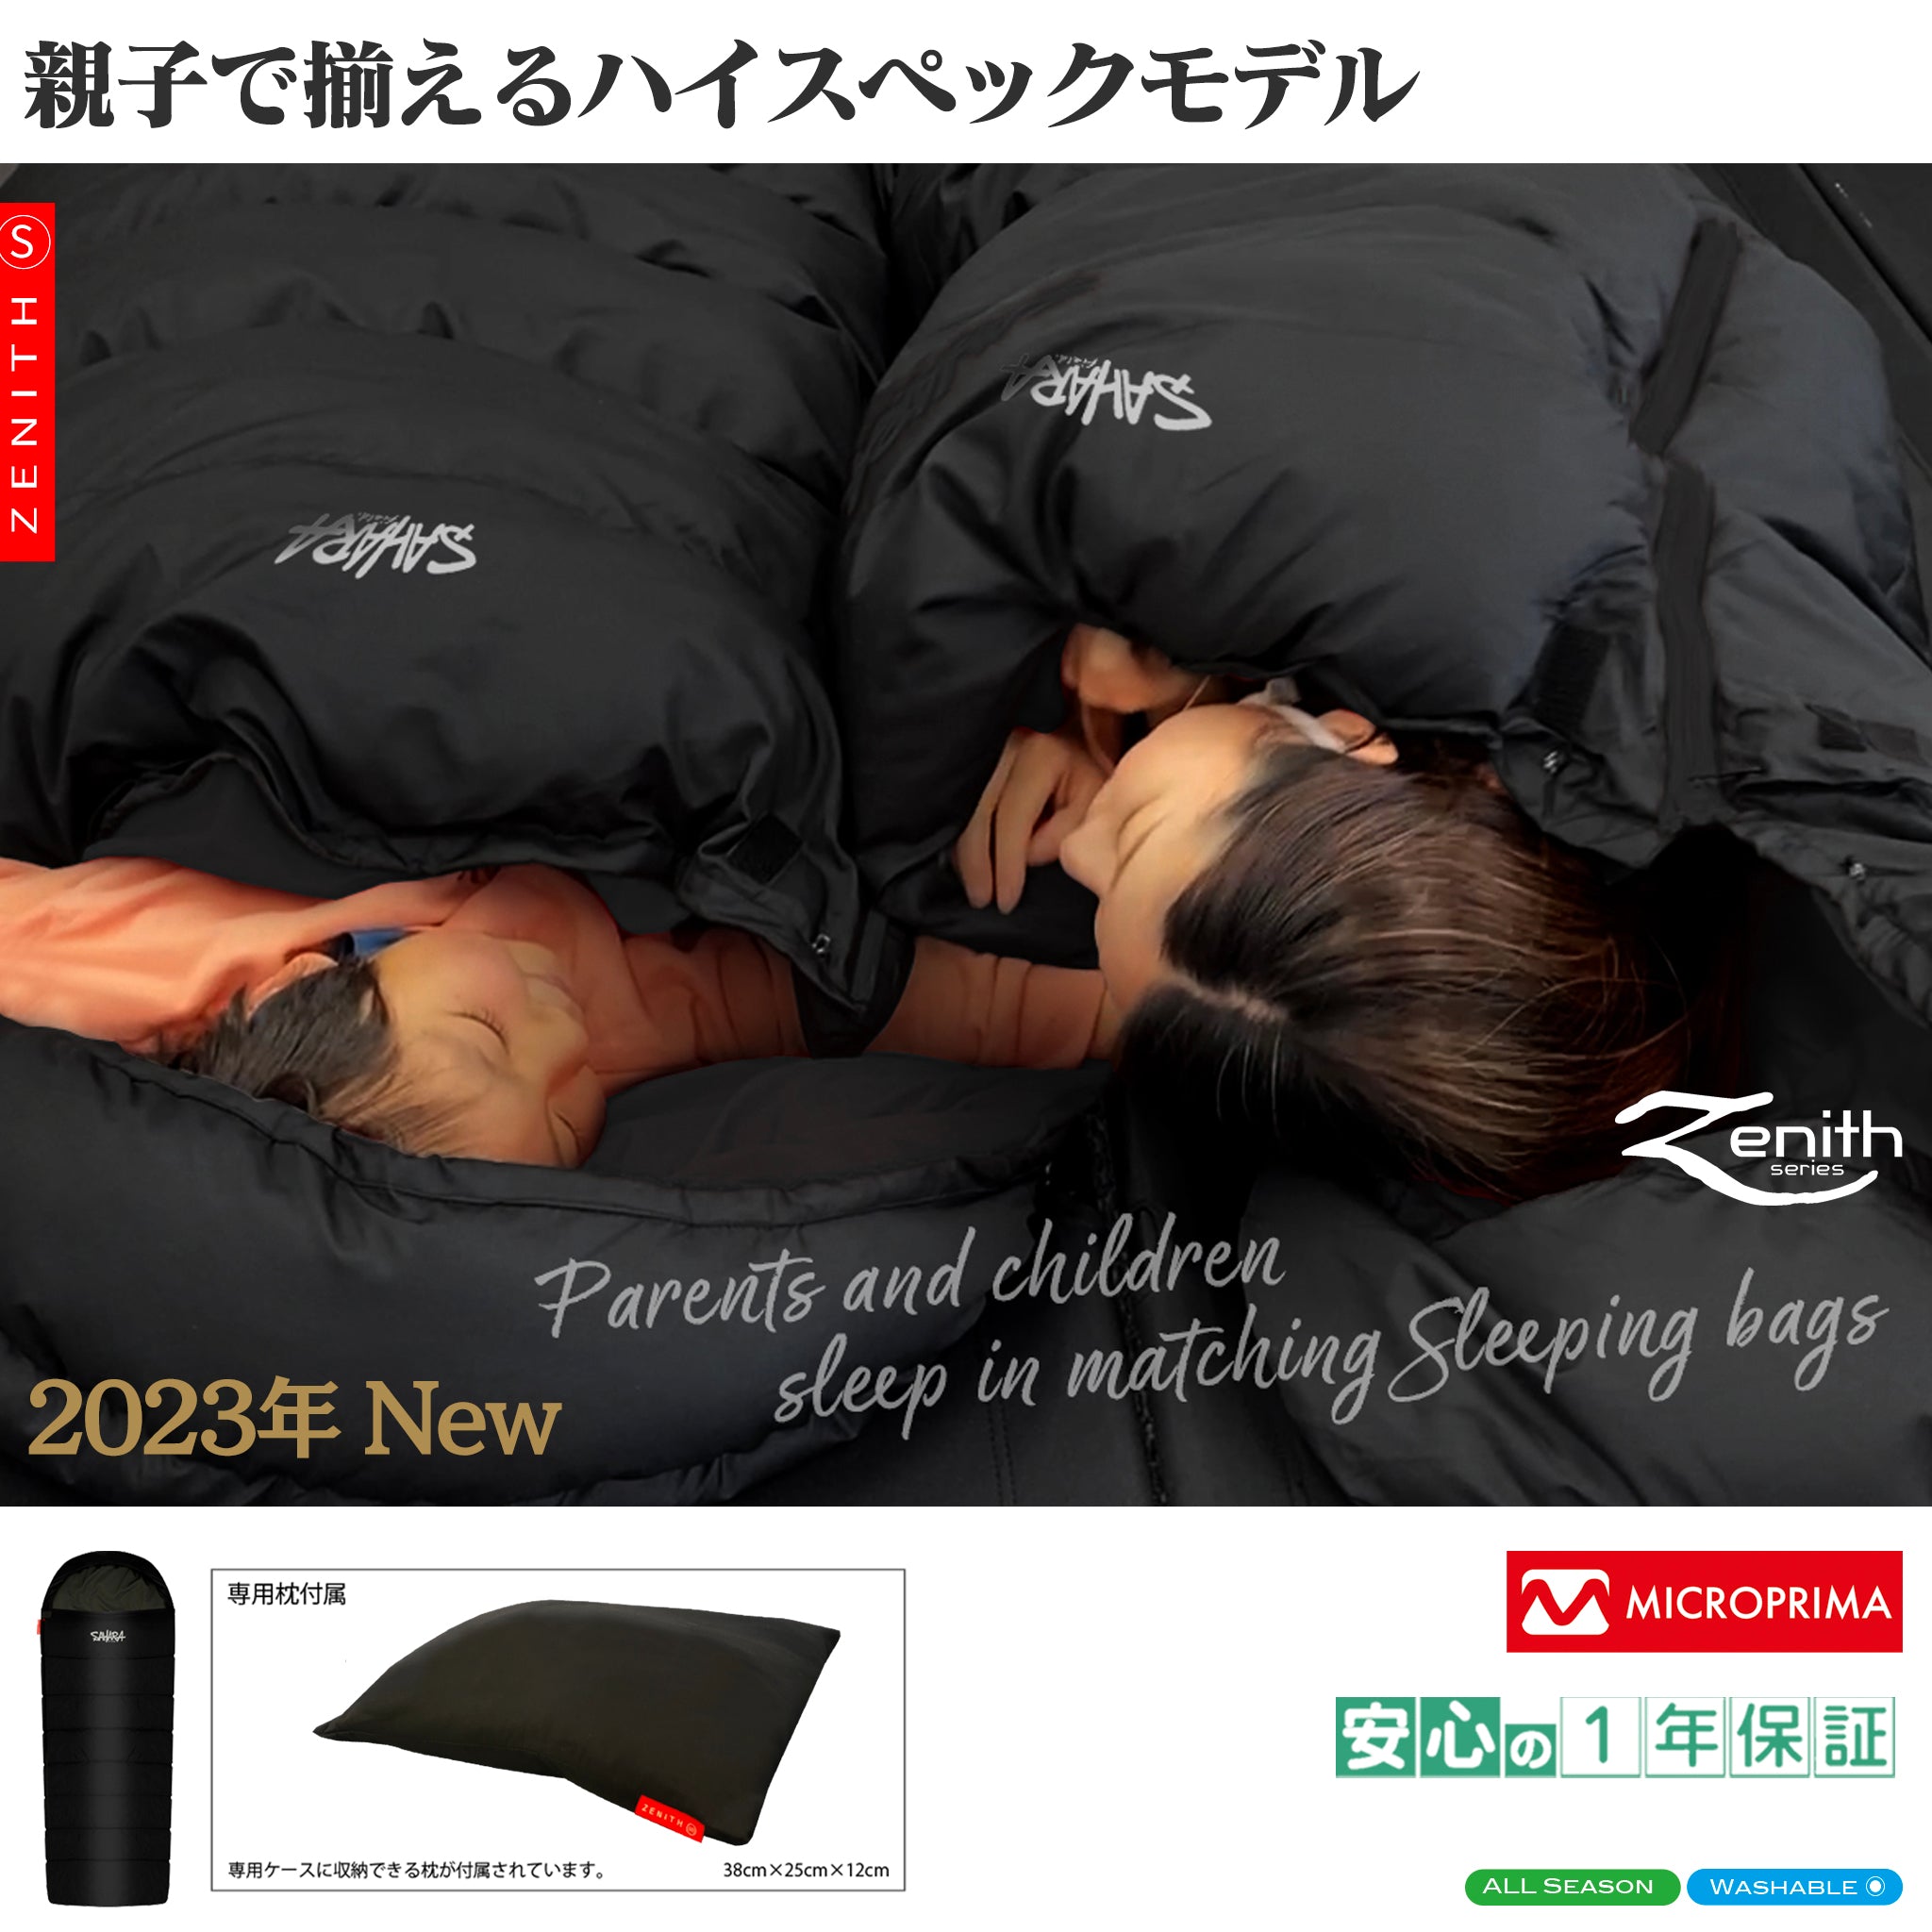 FieldSAHARA ZHK1500 キッズ寝袋 ハイブリッド型 枕付き 限界使用可能温度 -15℃